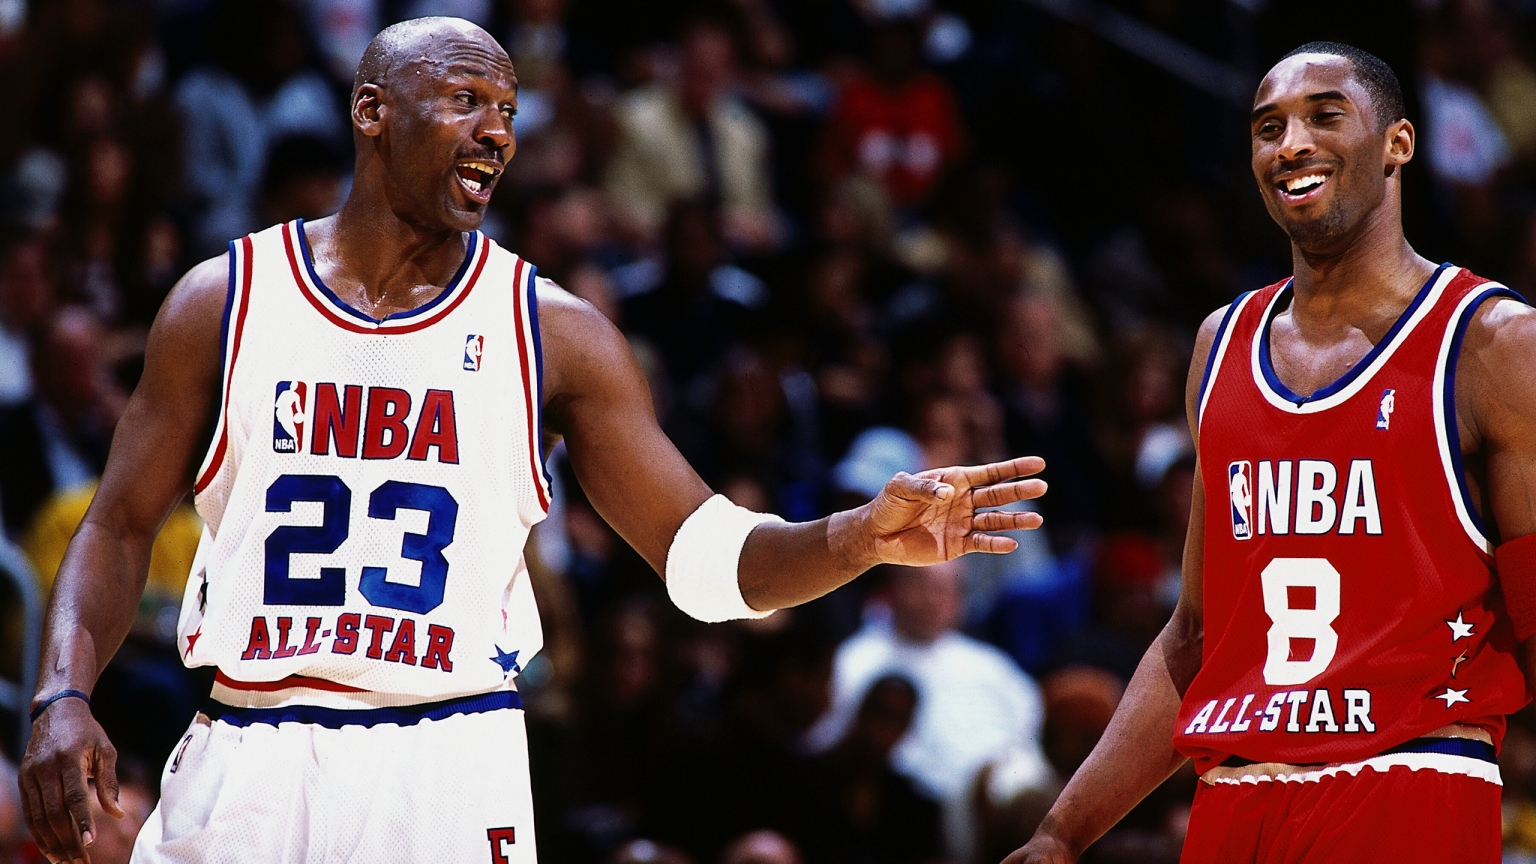 Kobe Bryant and Michael Jordan for 1536 x 864 HDTV resolution